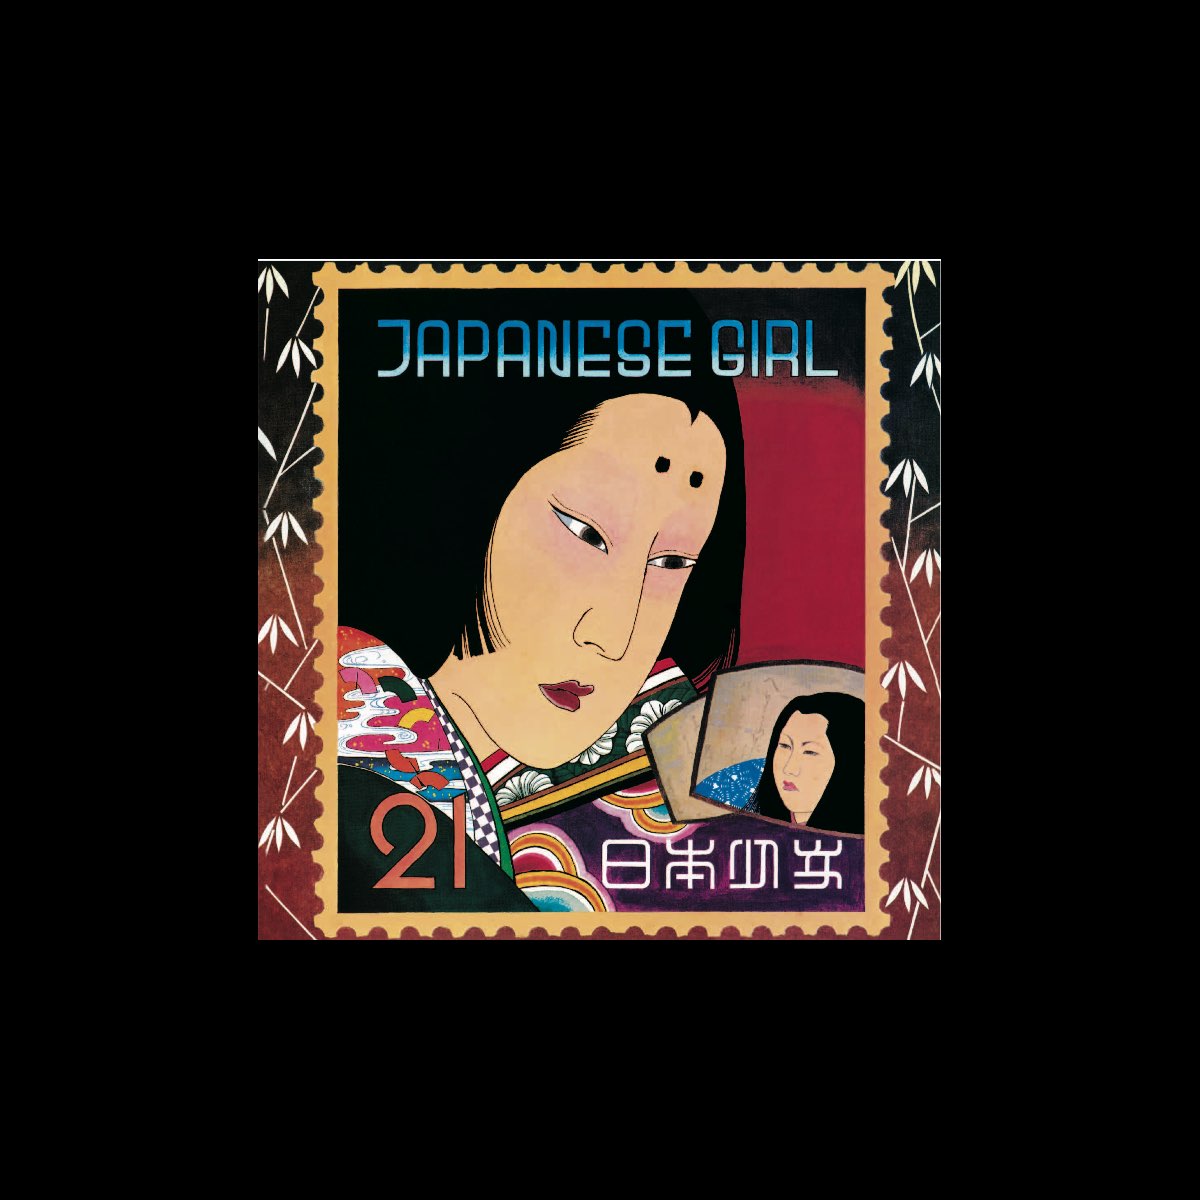 JAPANESE GIRL - 矢野顕子のアルバム - Apple Music